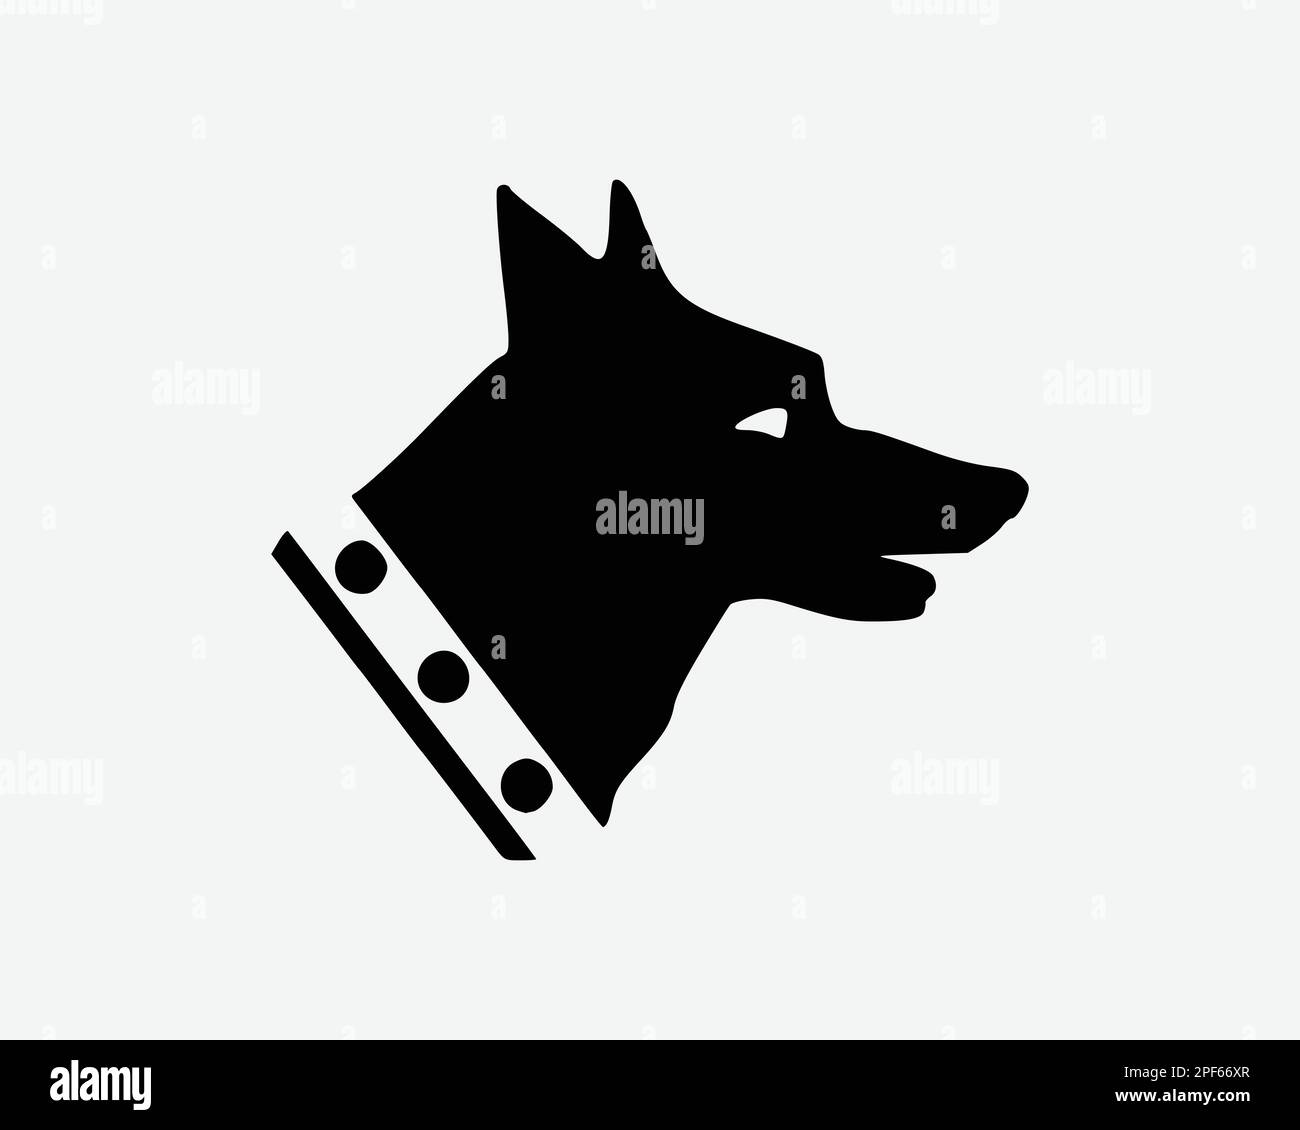 Guard Dog Icon German Shepherd Head Police Service Canine Vector Black White Silhouette Symbol Sign Graphic Clipart Artwork Illustration Pictogram Stock Vector